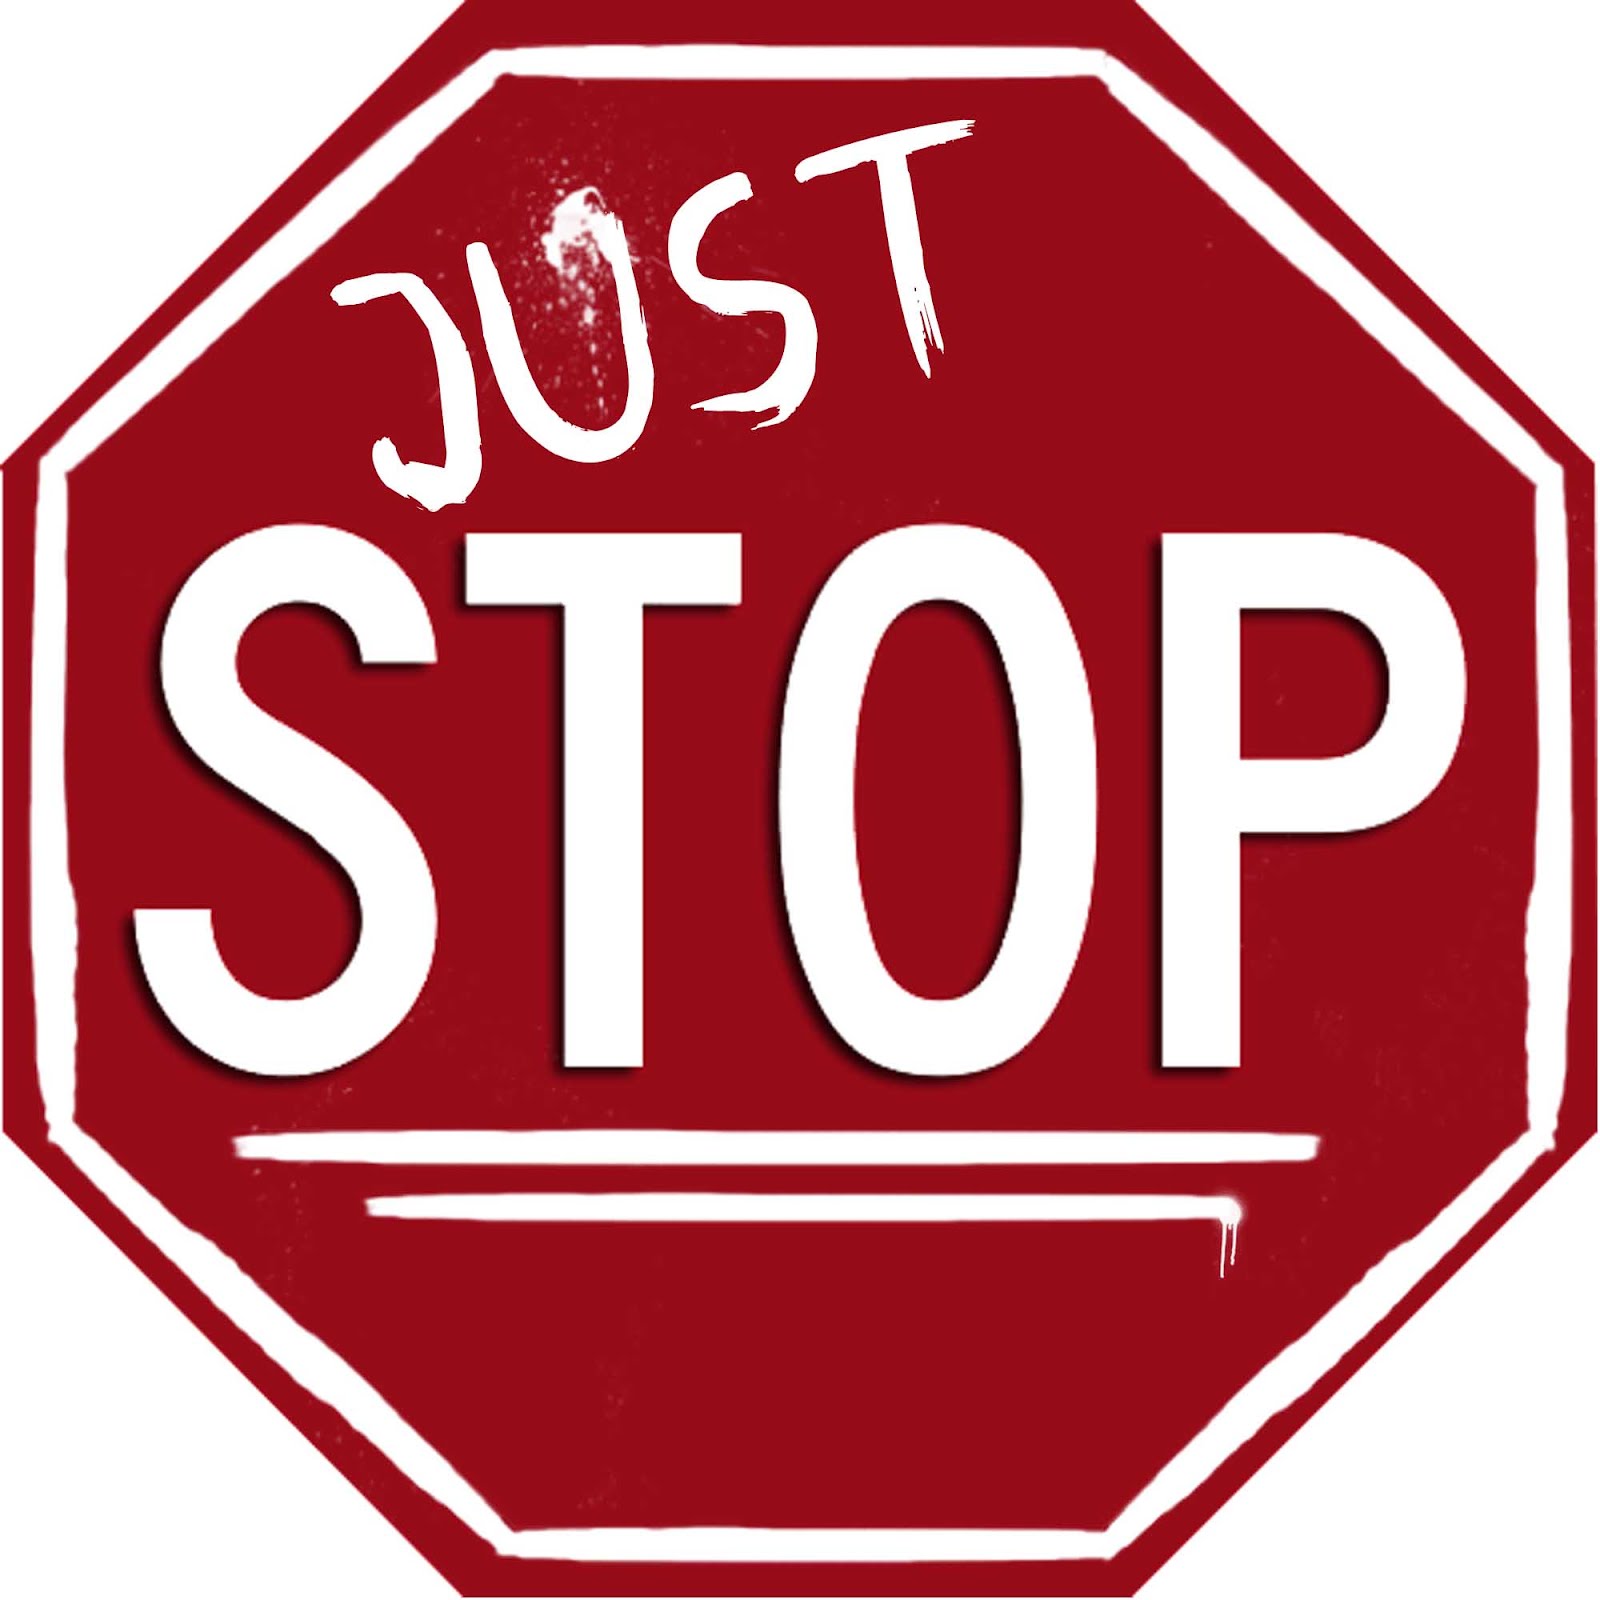 MHS Digital imaging Heather: "Just Stop" Logo